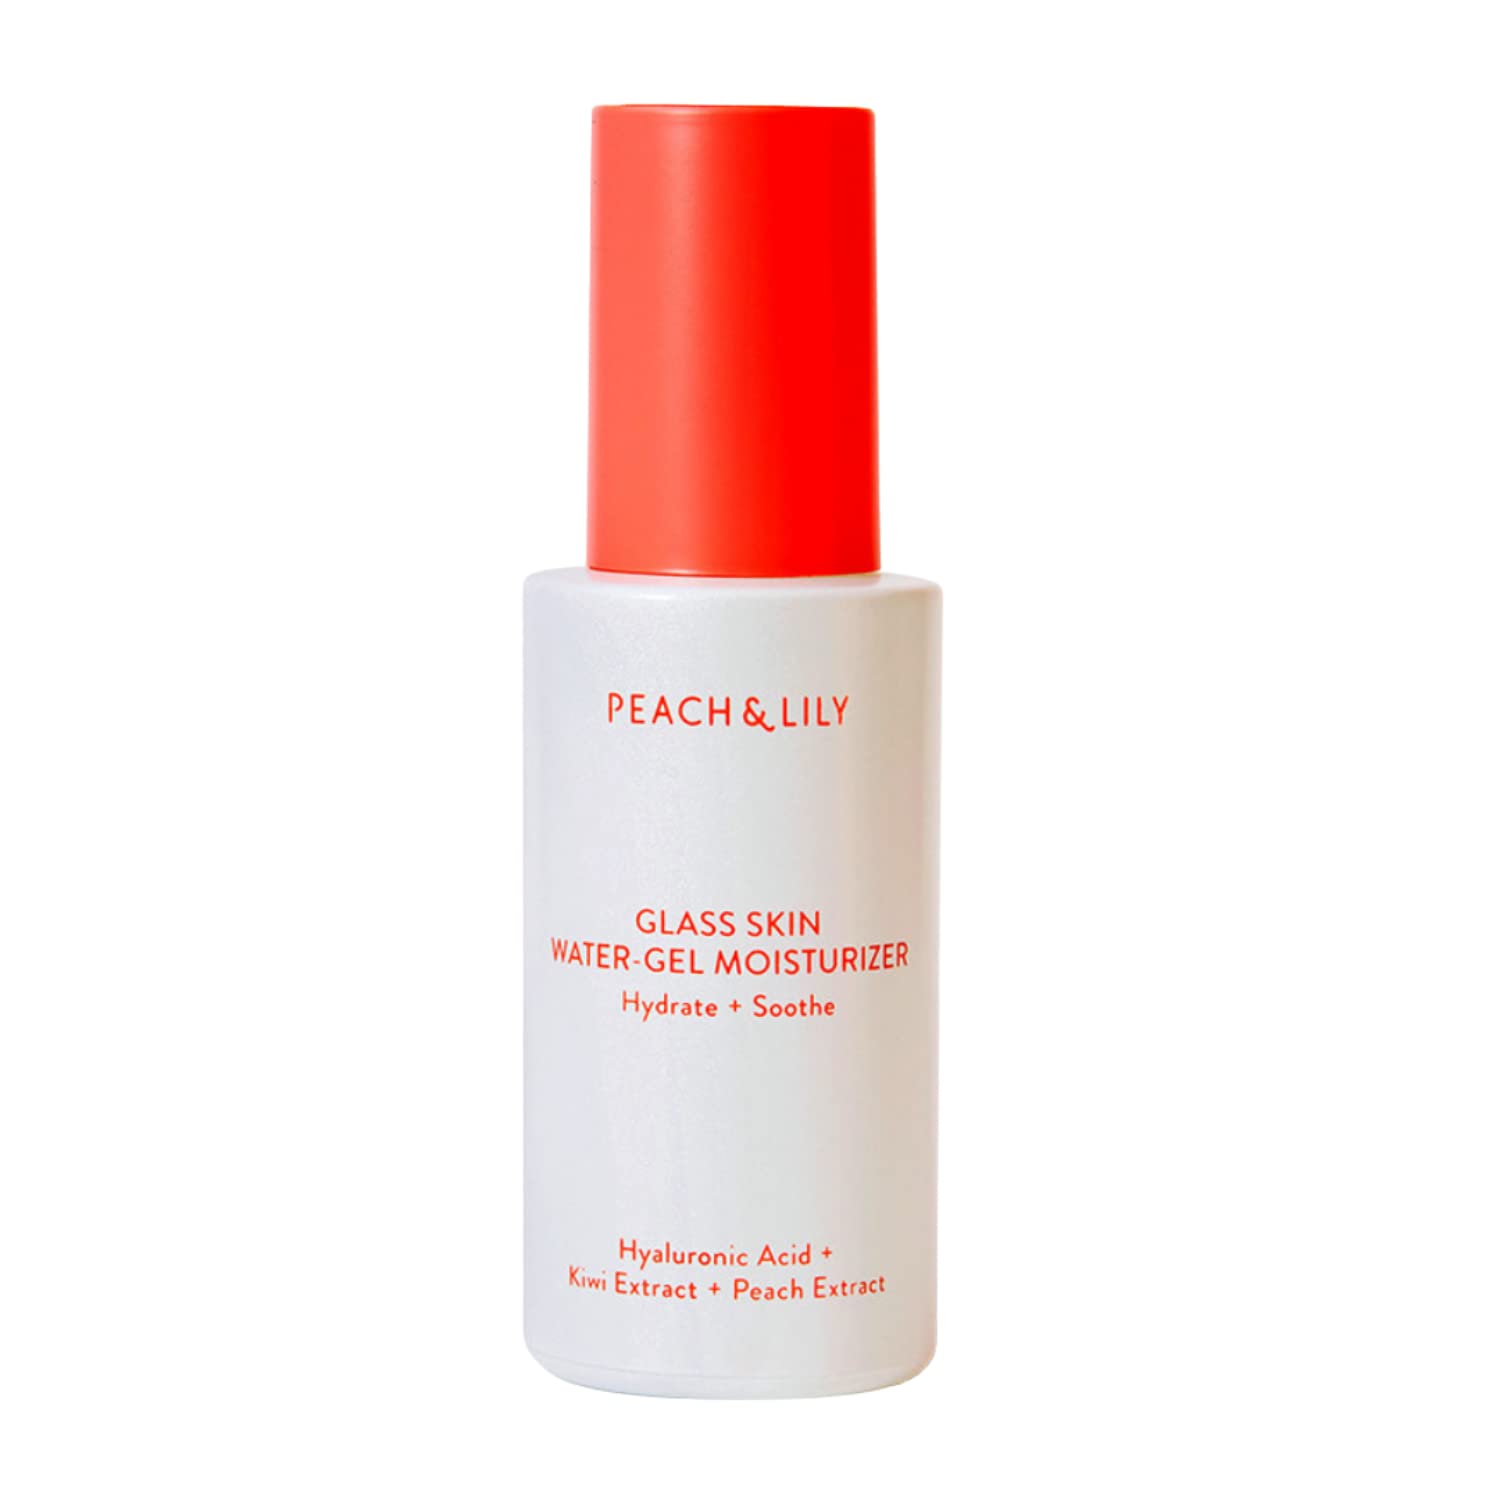 Peach & Lily Glass Skin Water-Gel Oil-Free Moisturizer